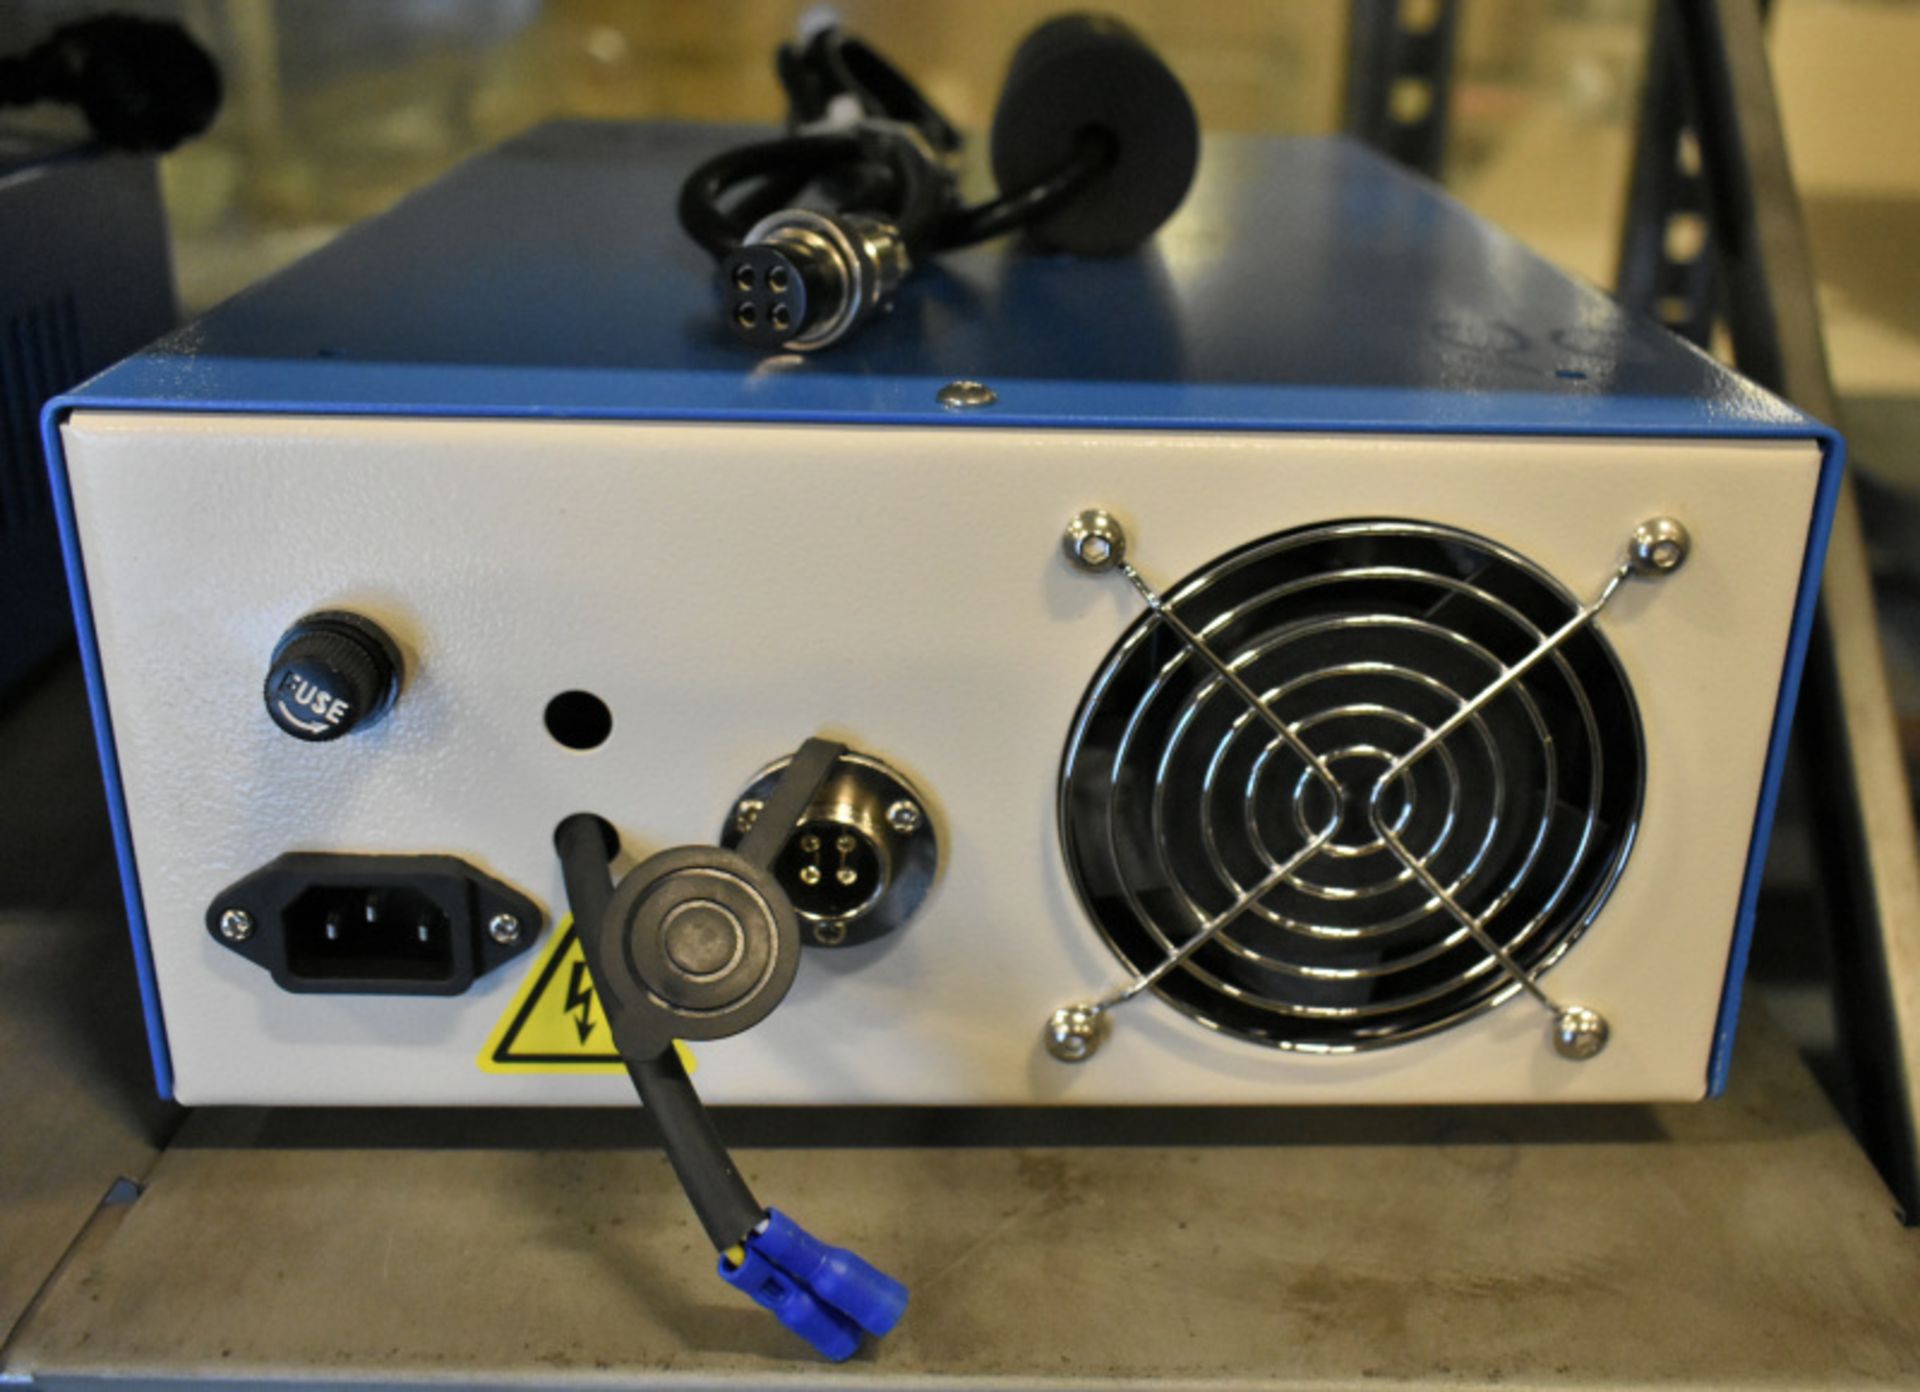 DCR MAM DG-310 Mask Attaching Electrical Unit 200-250V - 50Mhz - Image 3 of 4